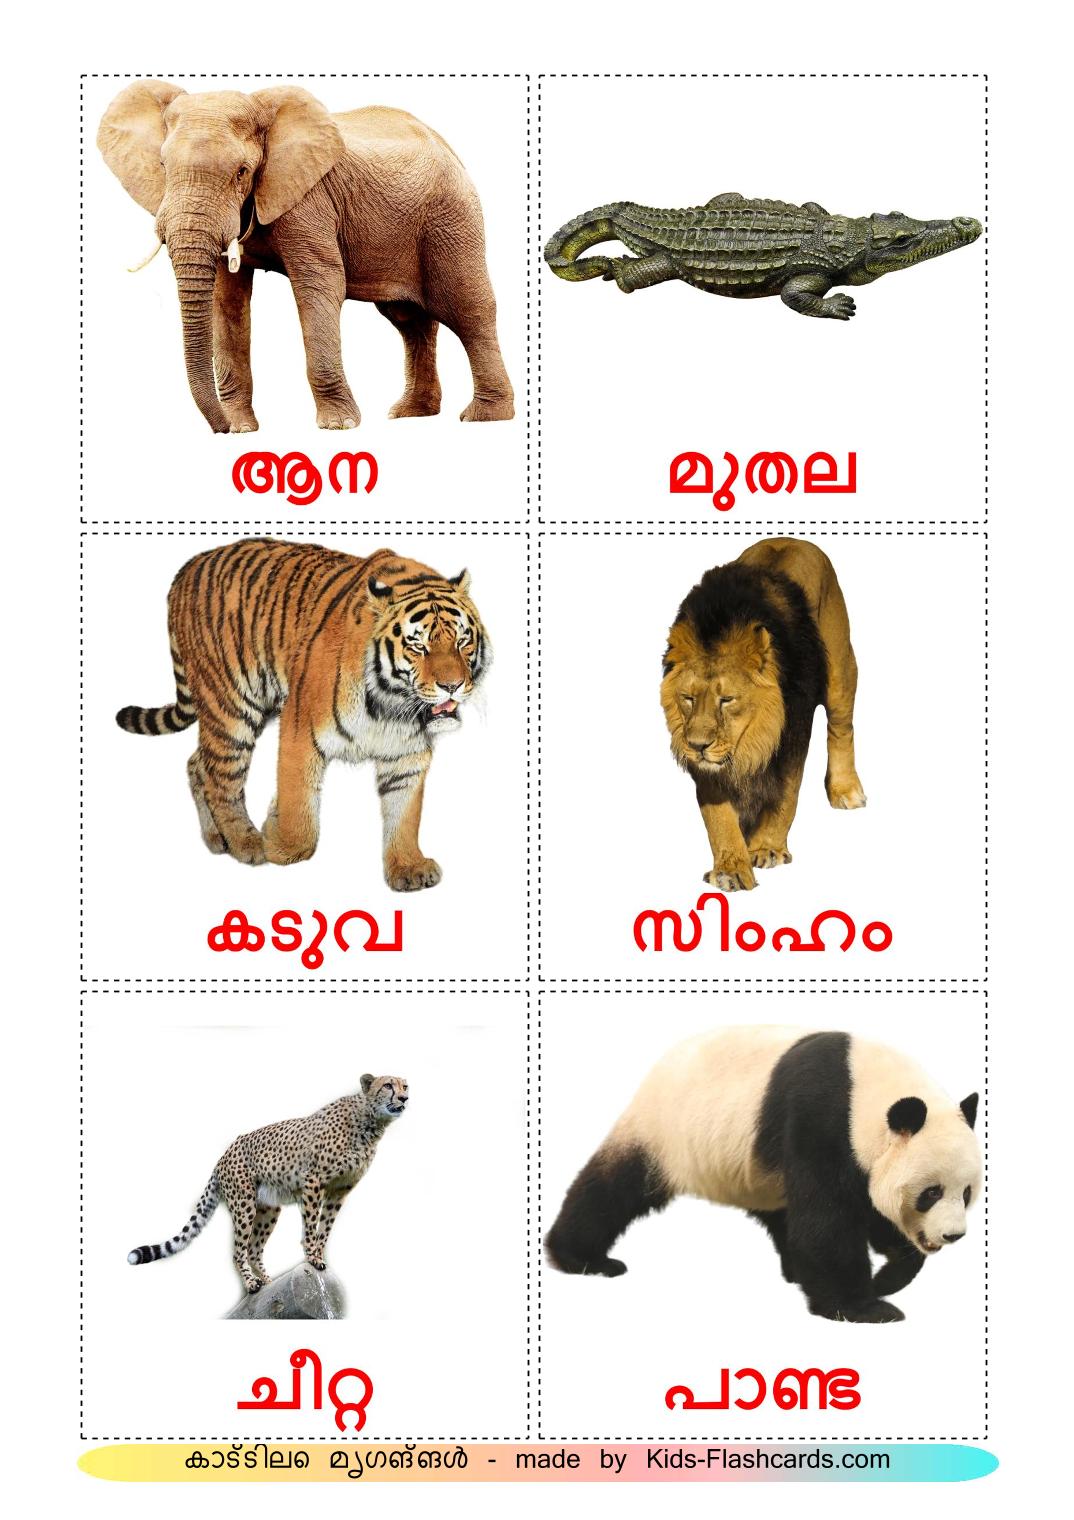 Animales de la Selva - 21 fichas de malayalam para imprimir gratis 